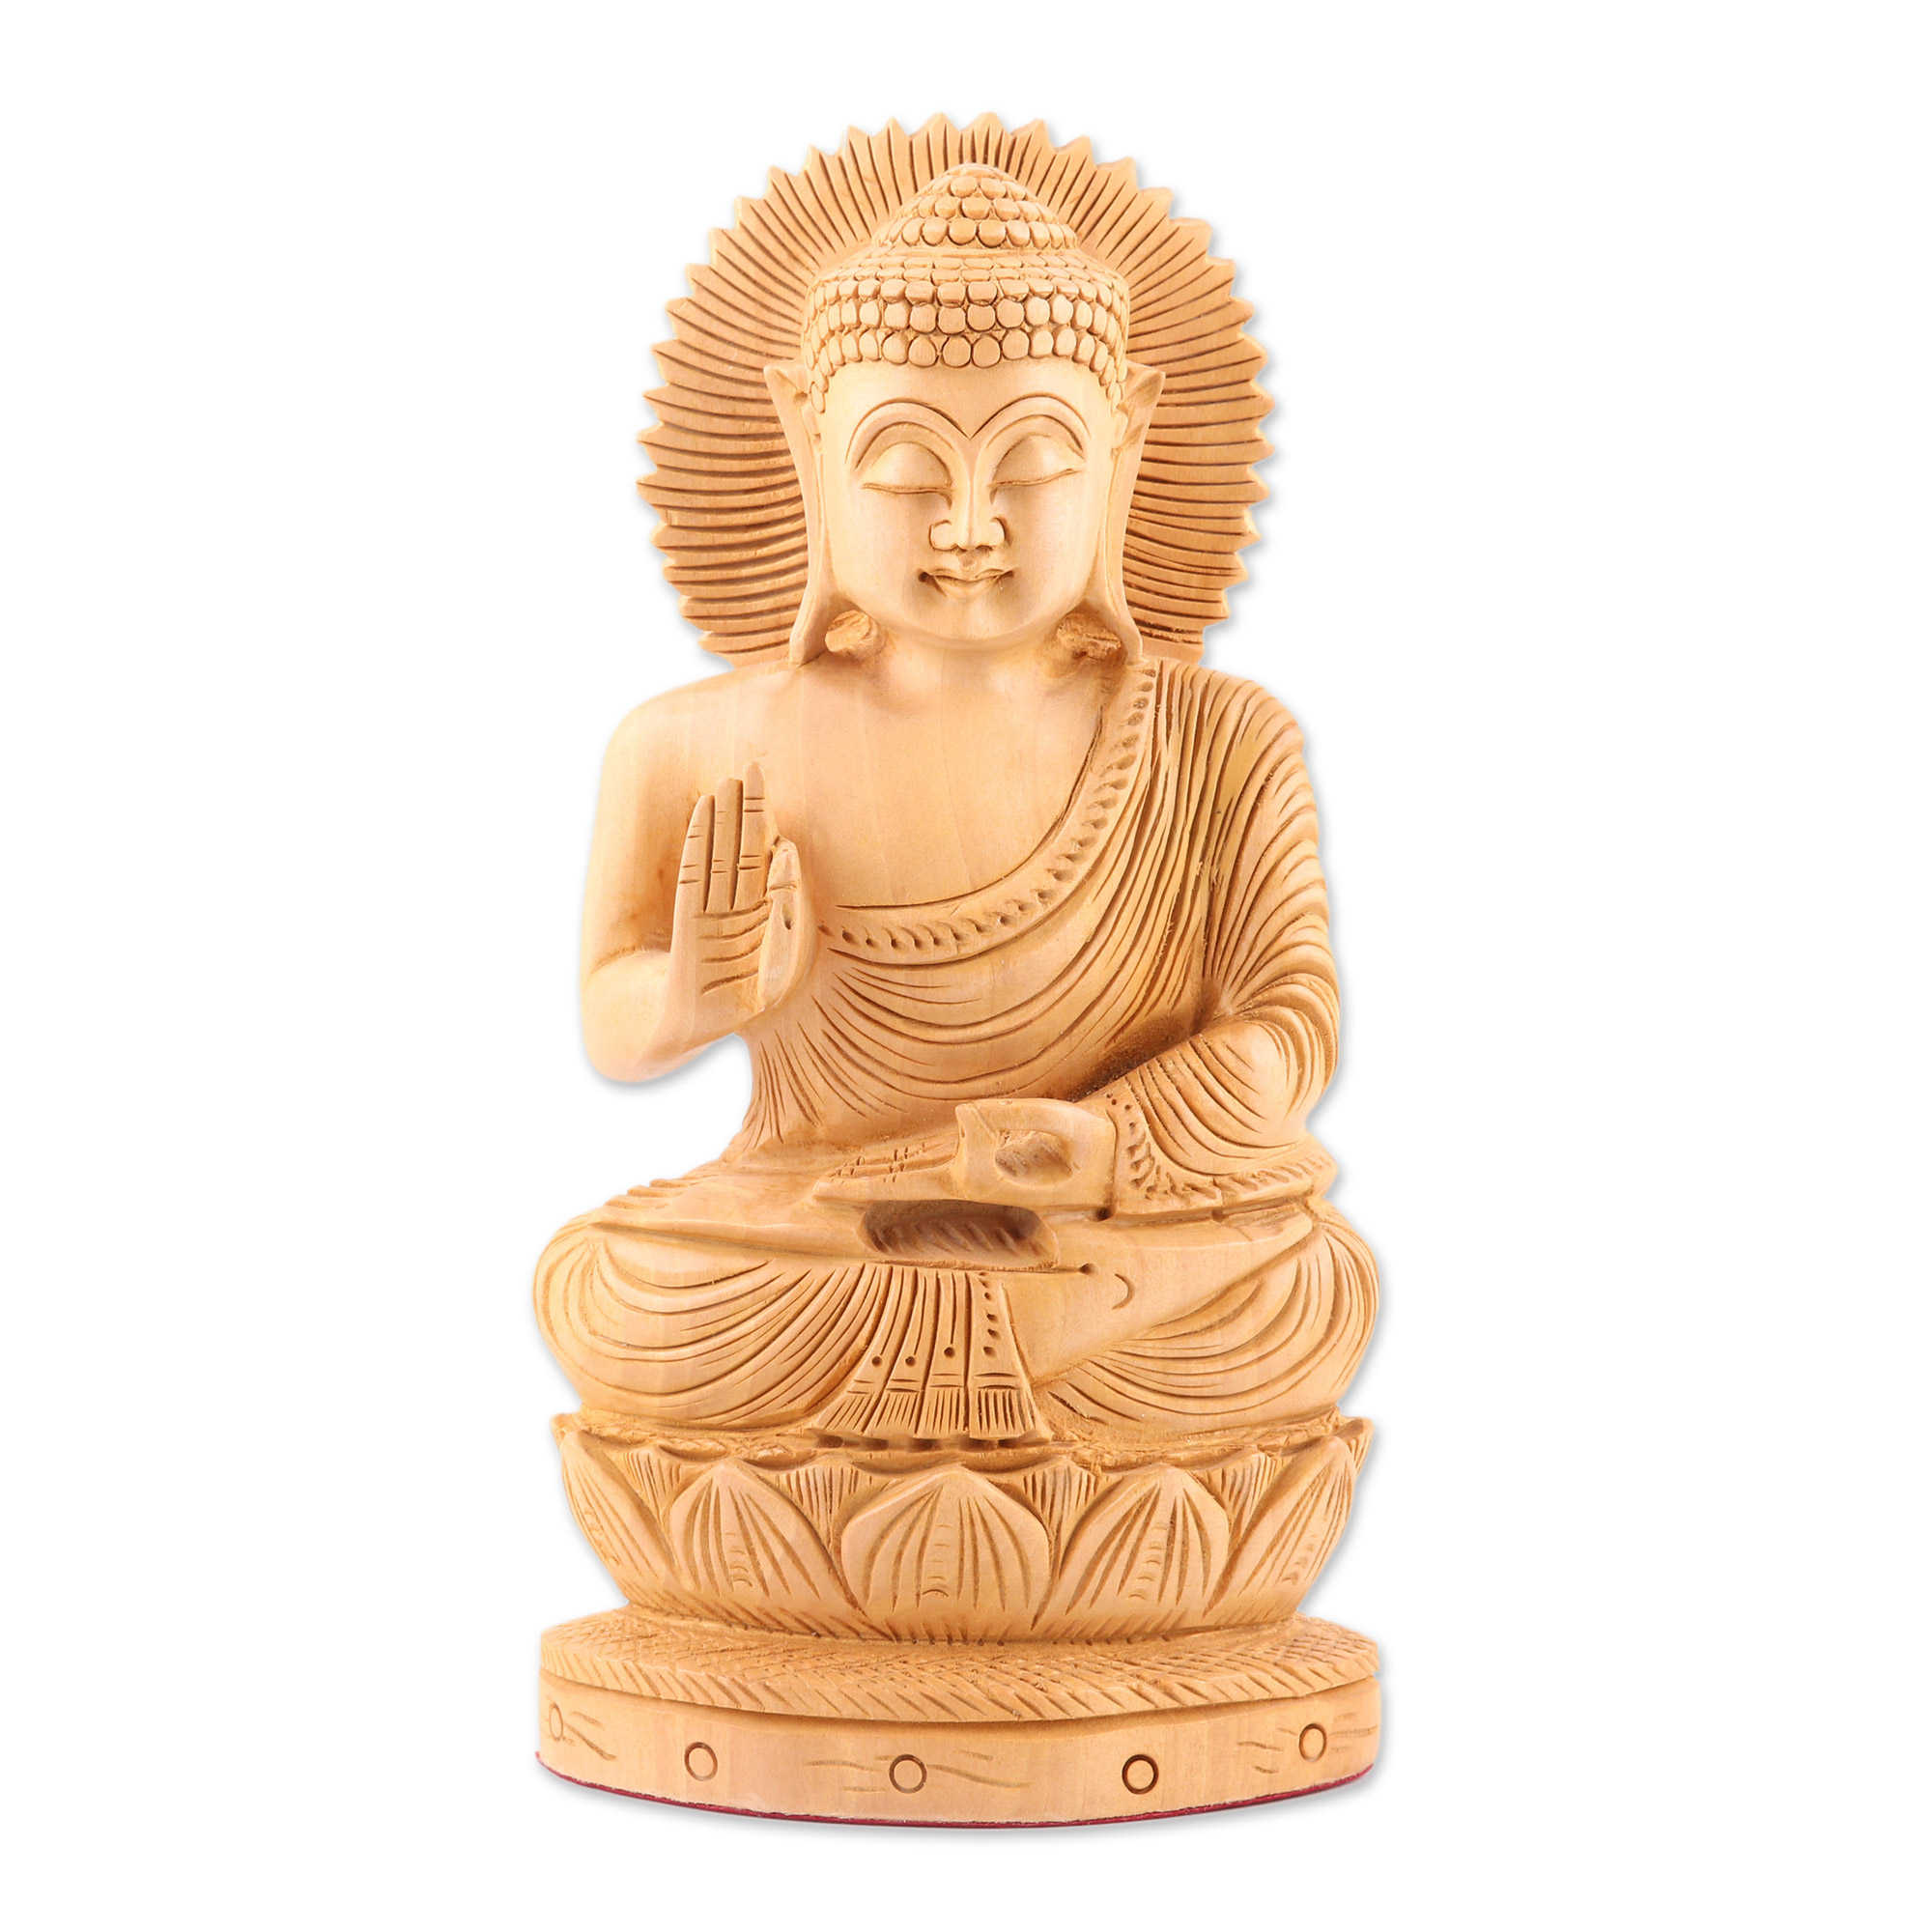 Carved wood statuette - Buddha, Peace on Earth | NOVICA